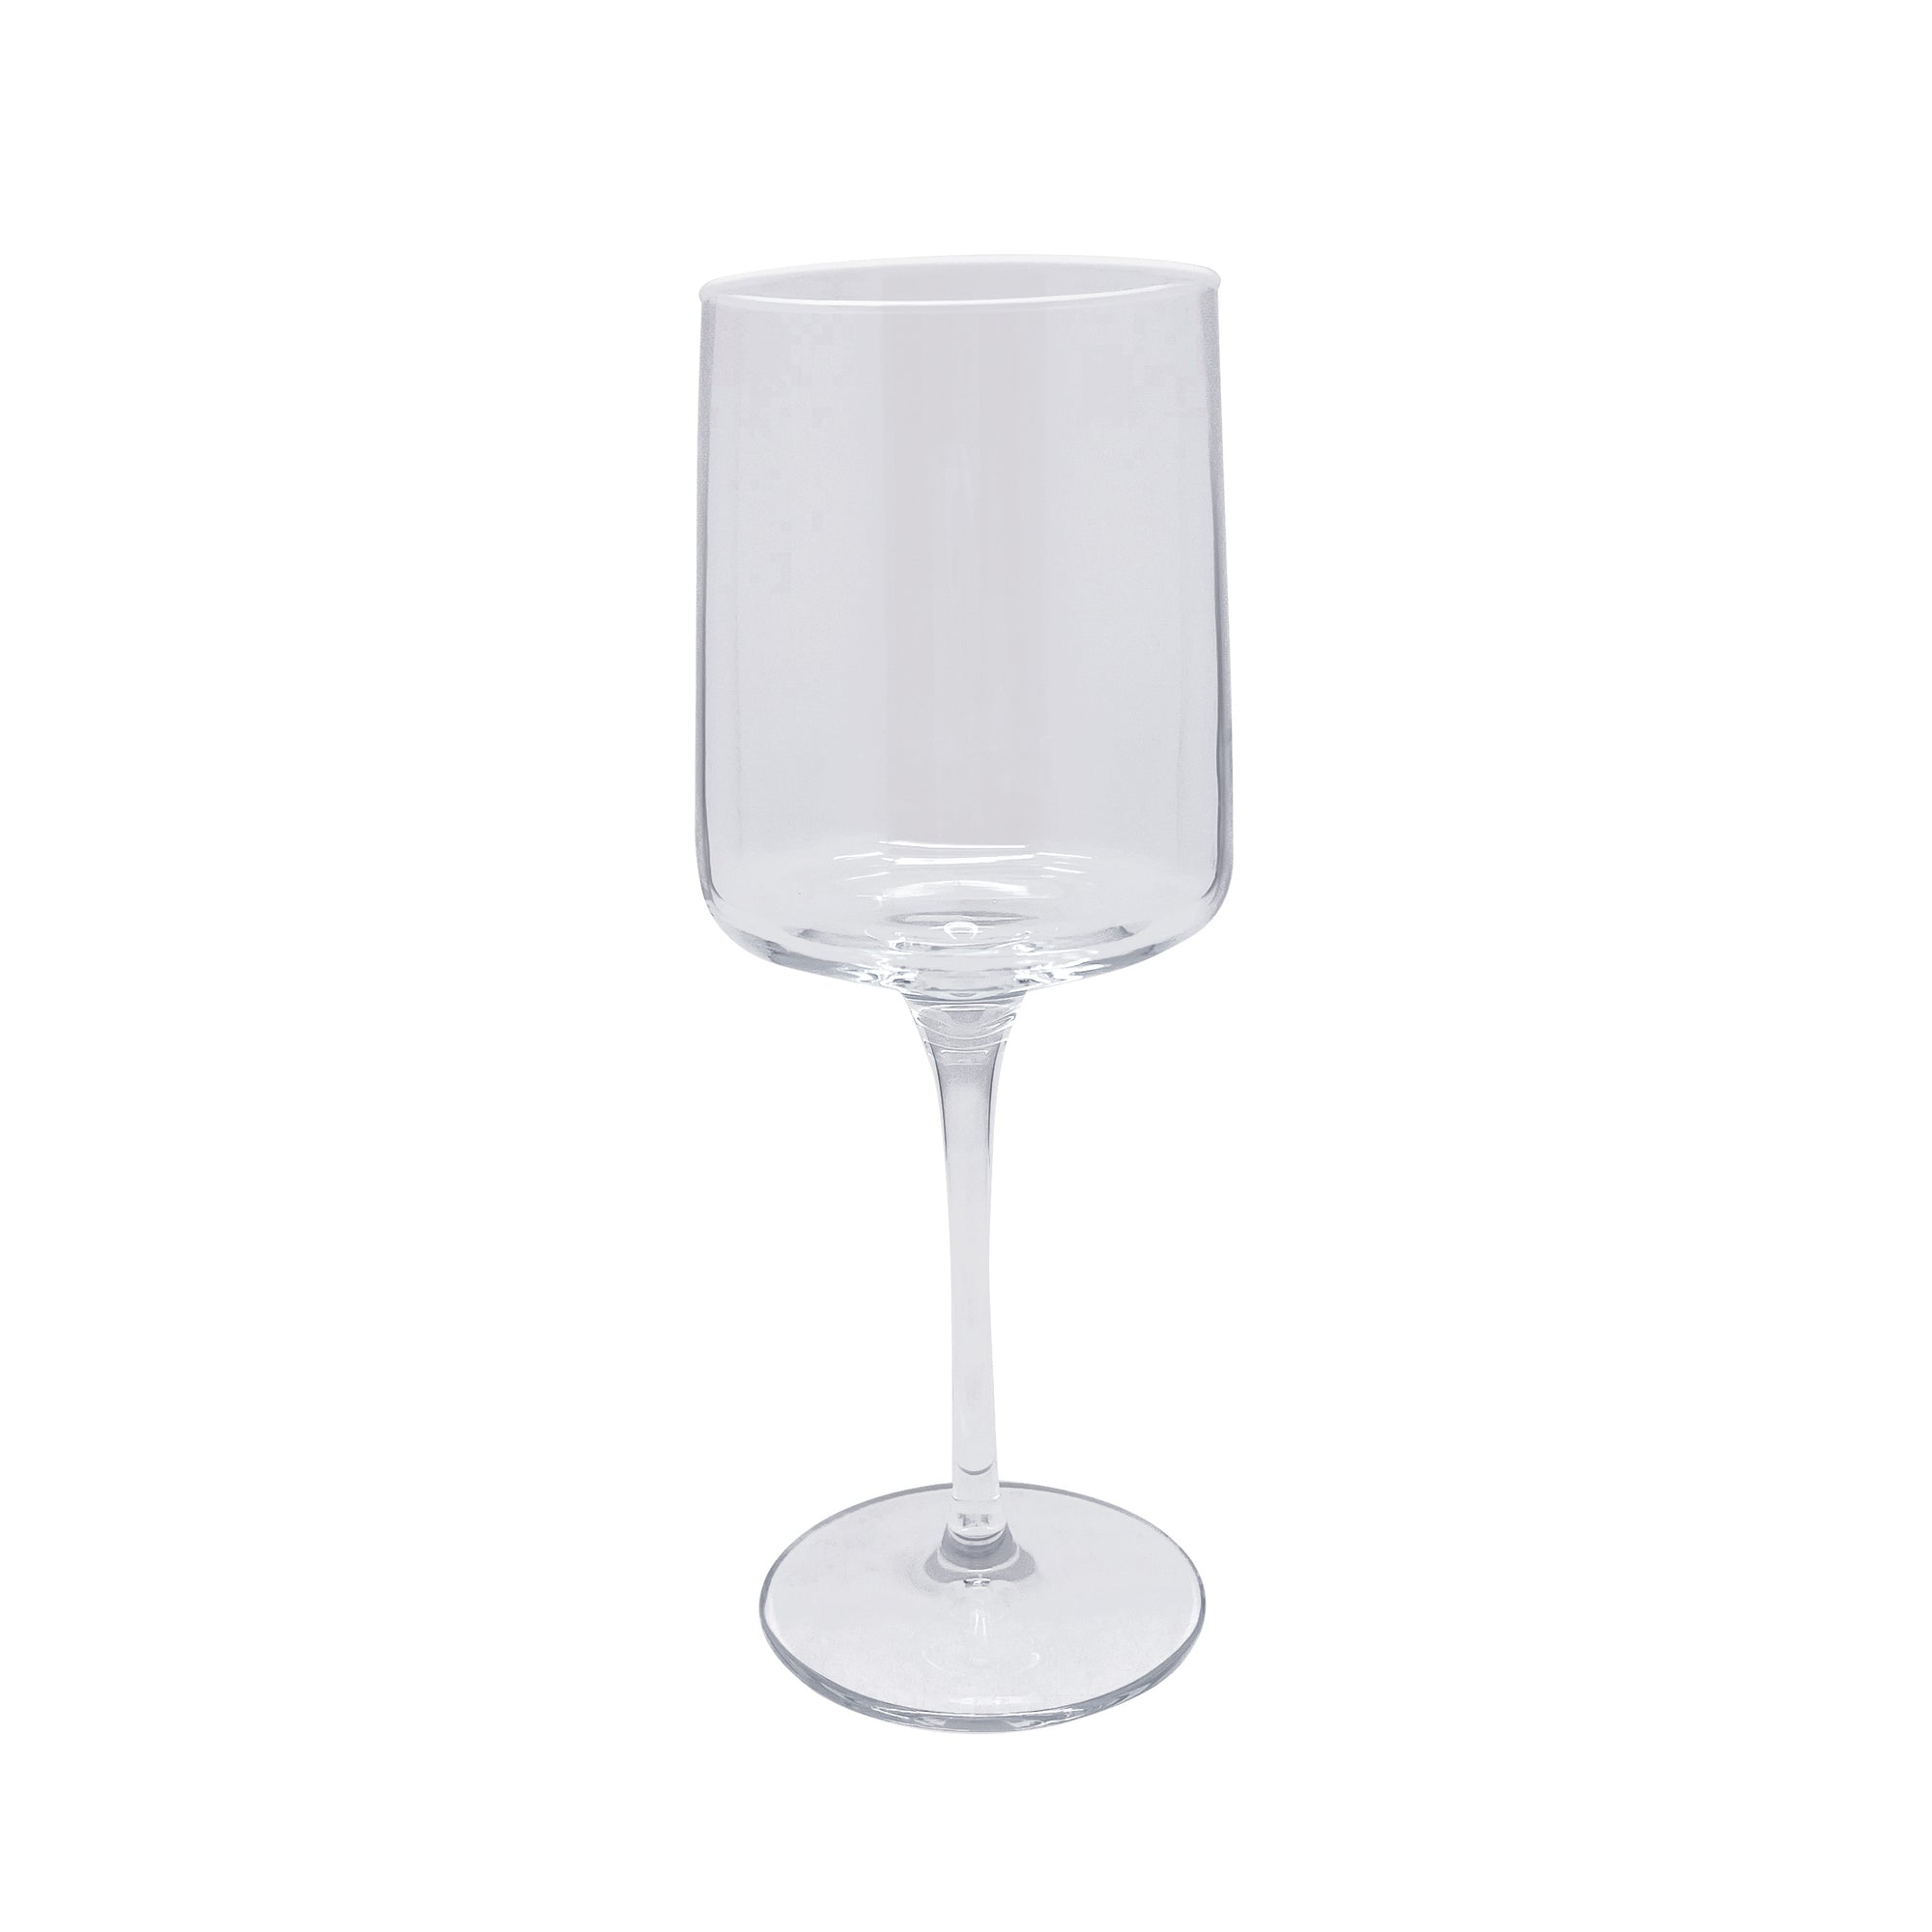 Fine Line Clear with White Rim Wine Glass